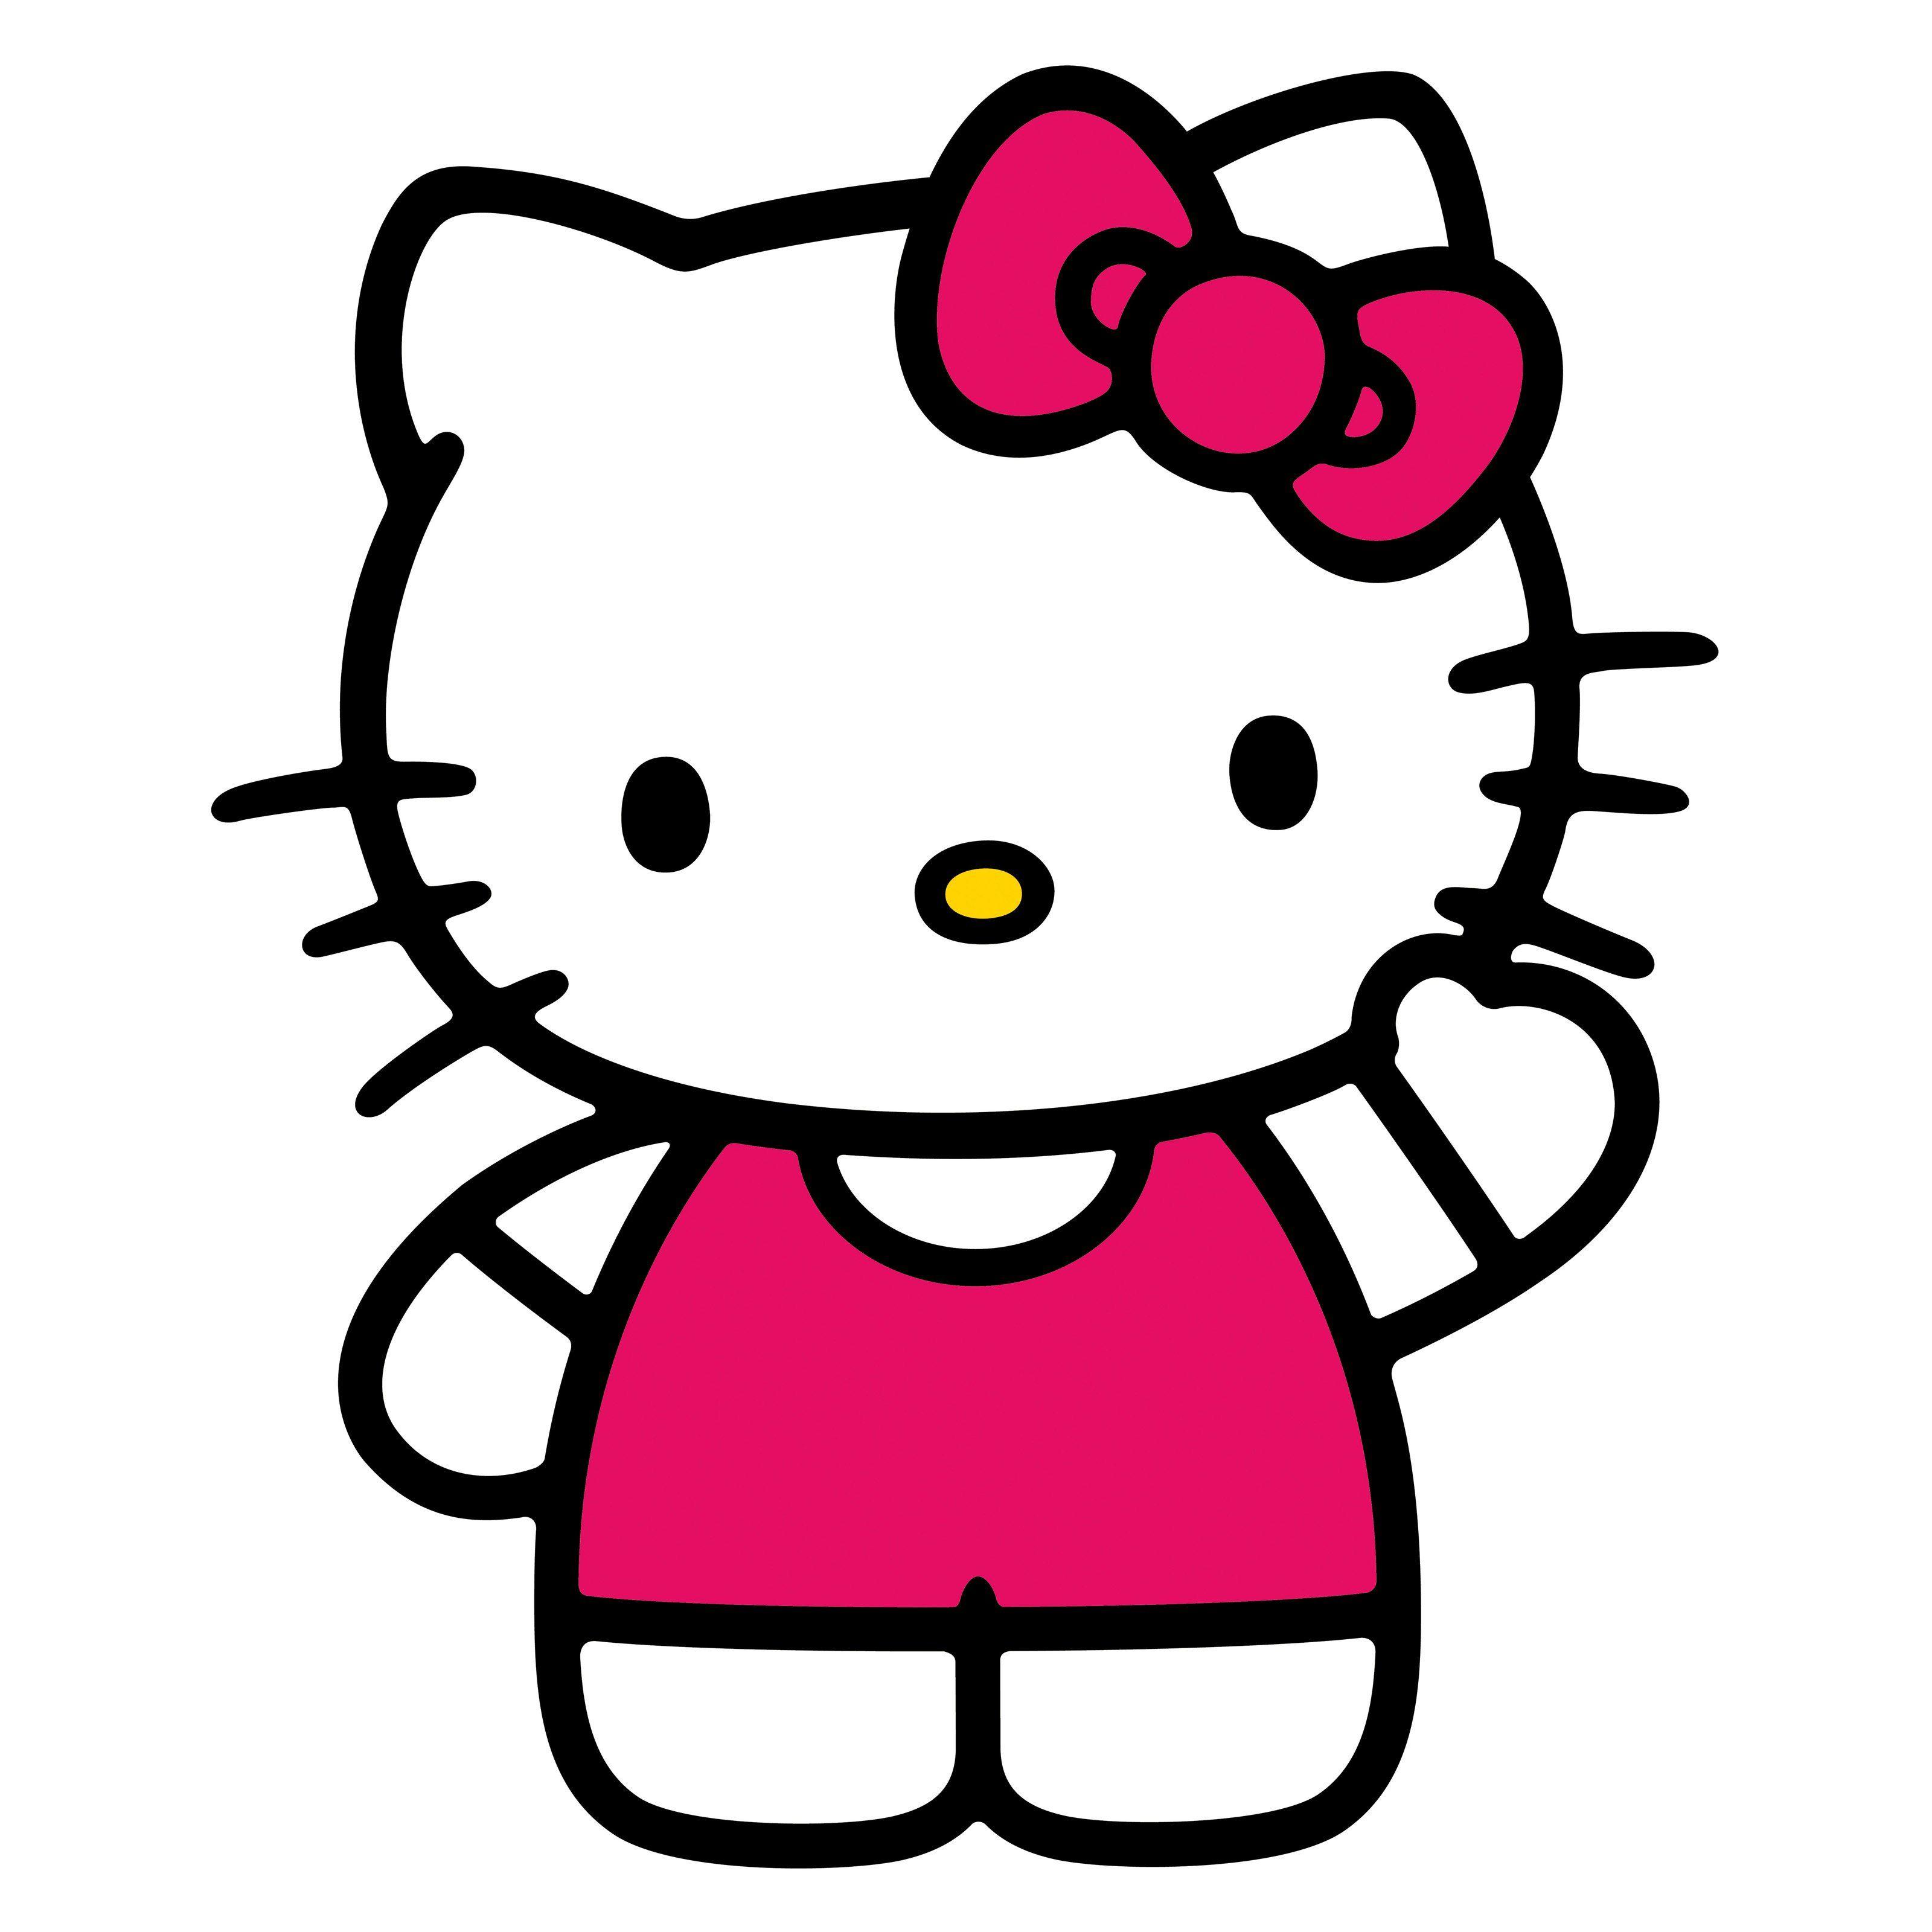 Cute Hello Kitty Wallpaper Download